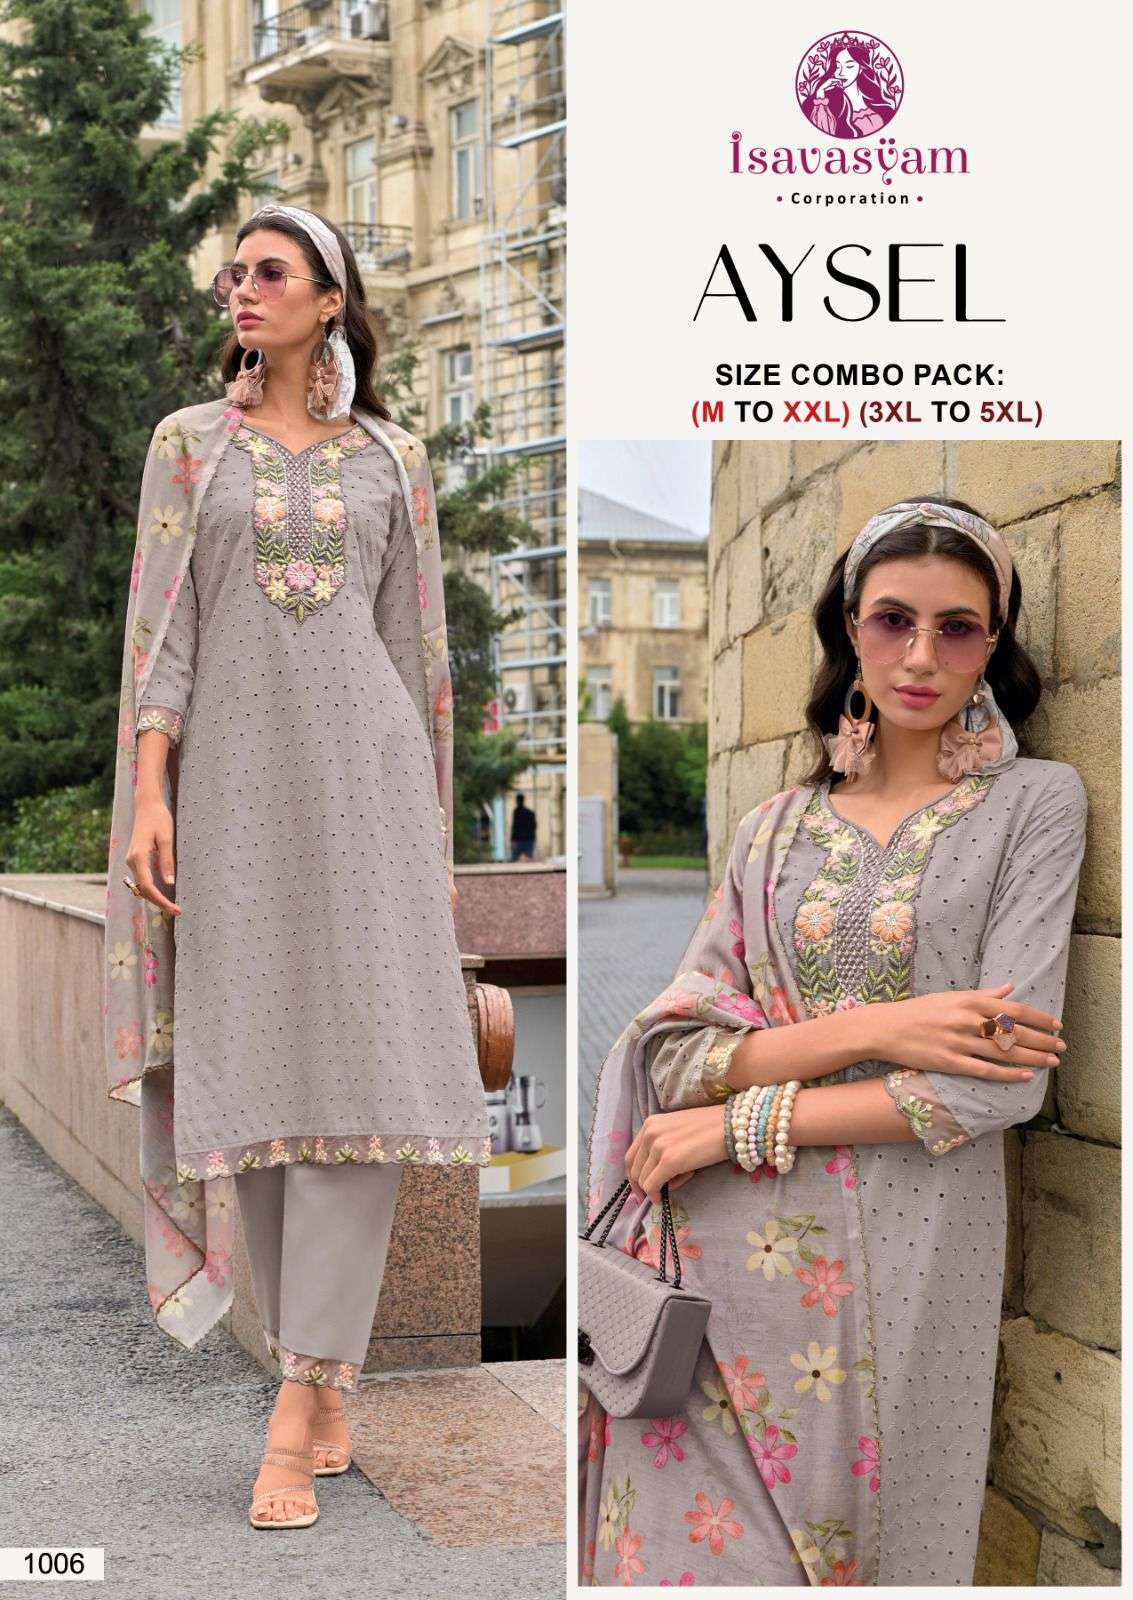 isavasyam corporation aysel 1006 design fancy work readymade cotton suits combo set online surat gujarat 